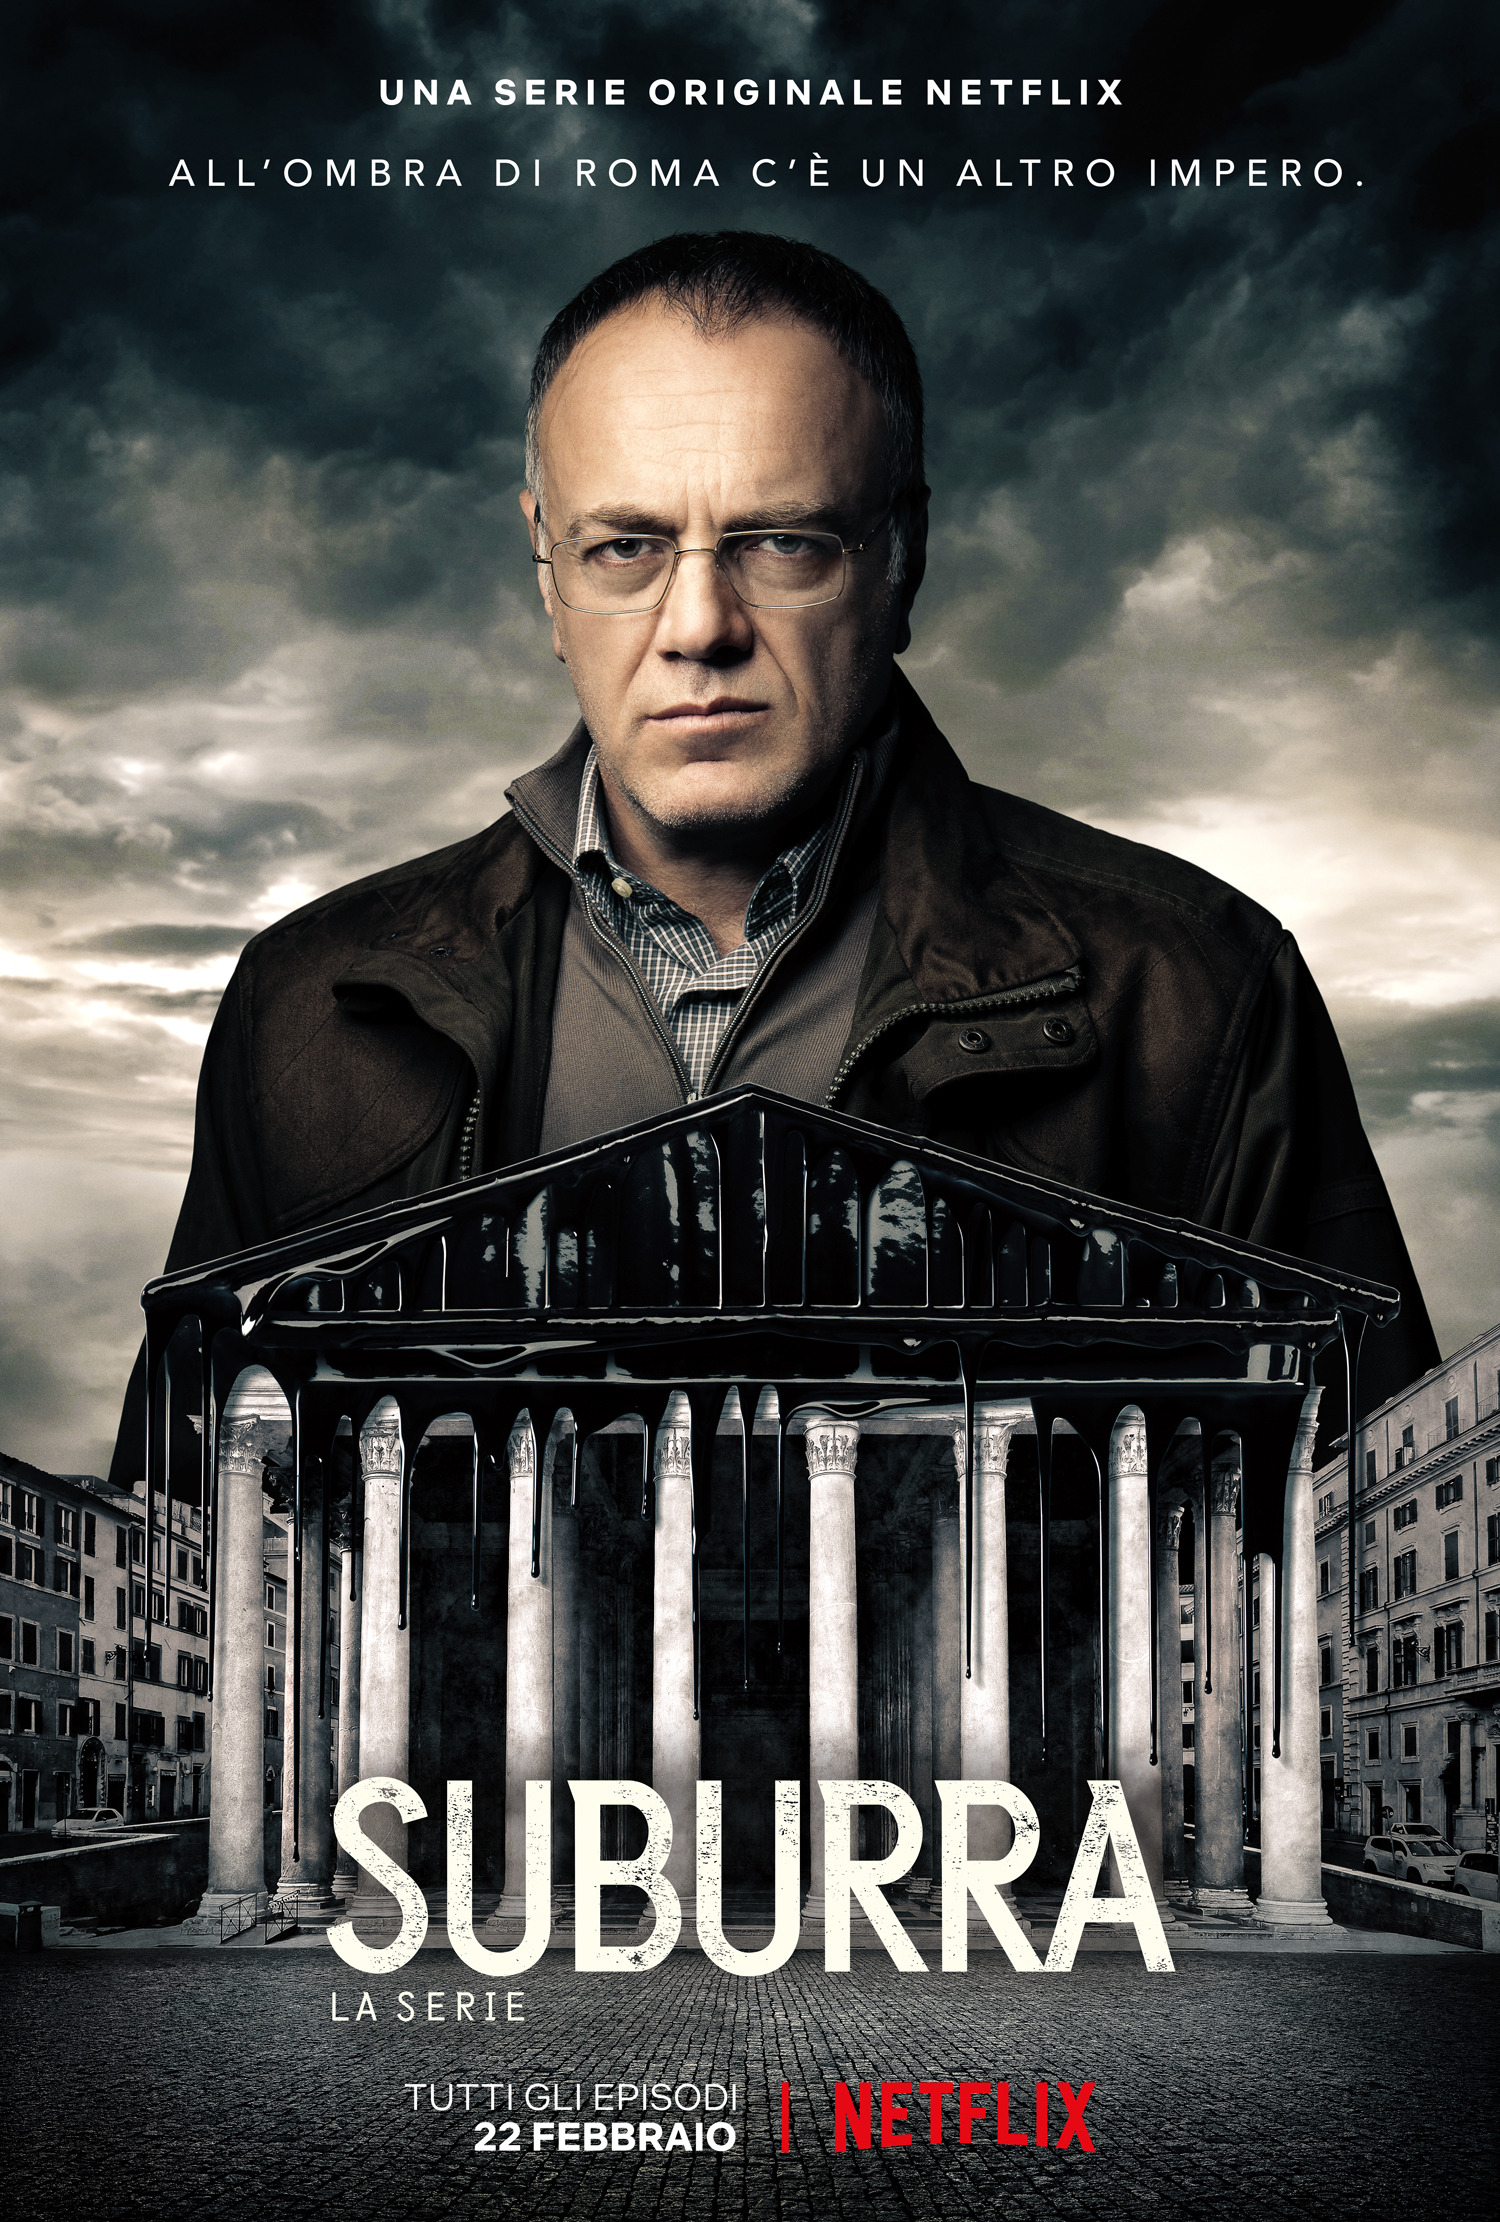 Mega Sized TV Poster Image for Suburra: la serie (#11 of 12)